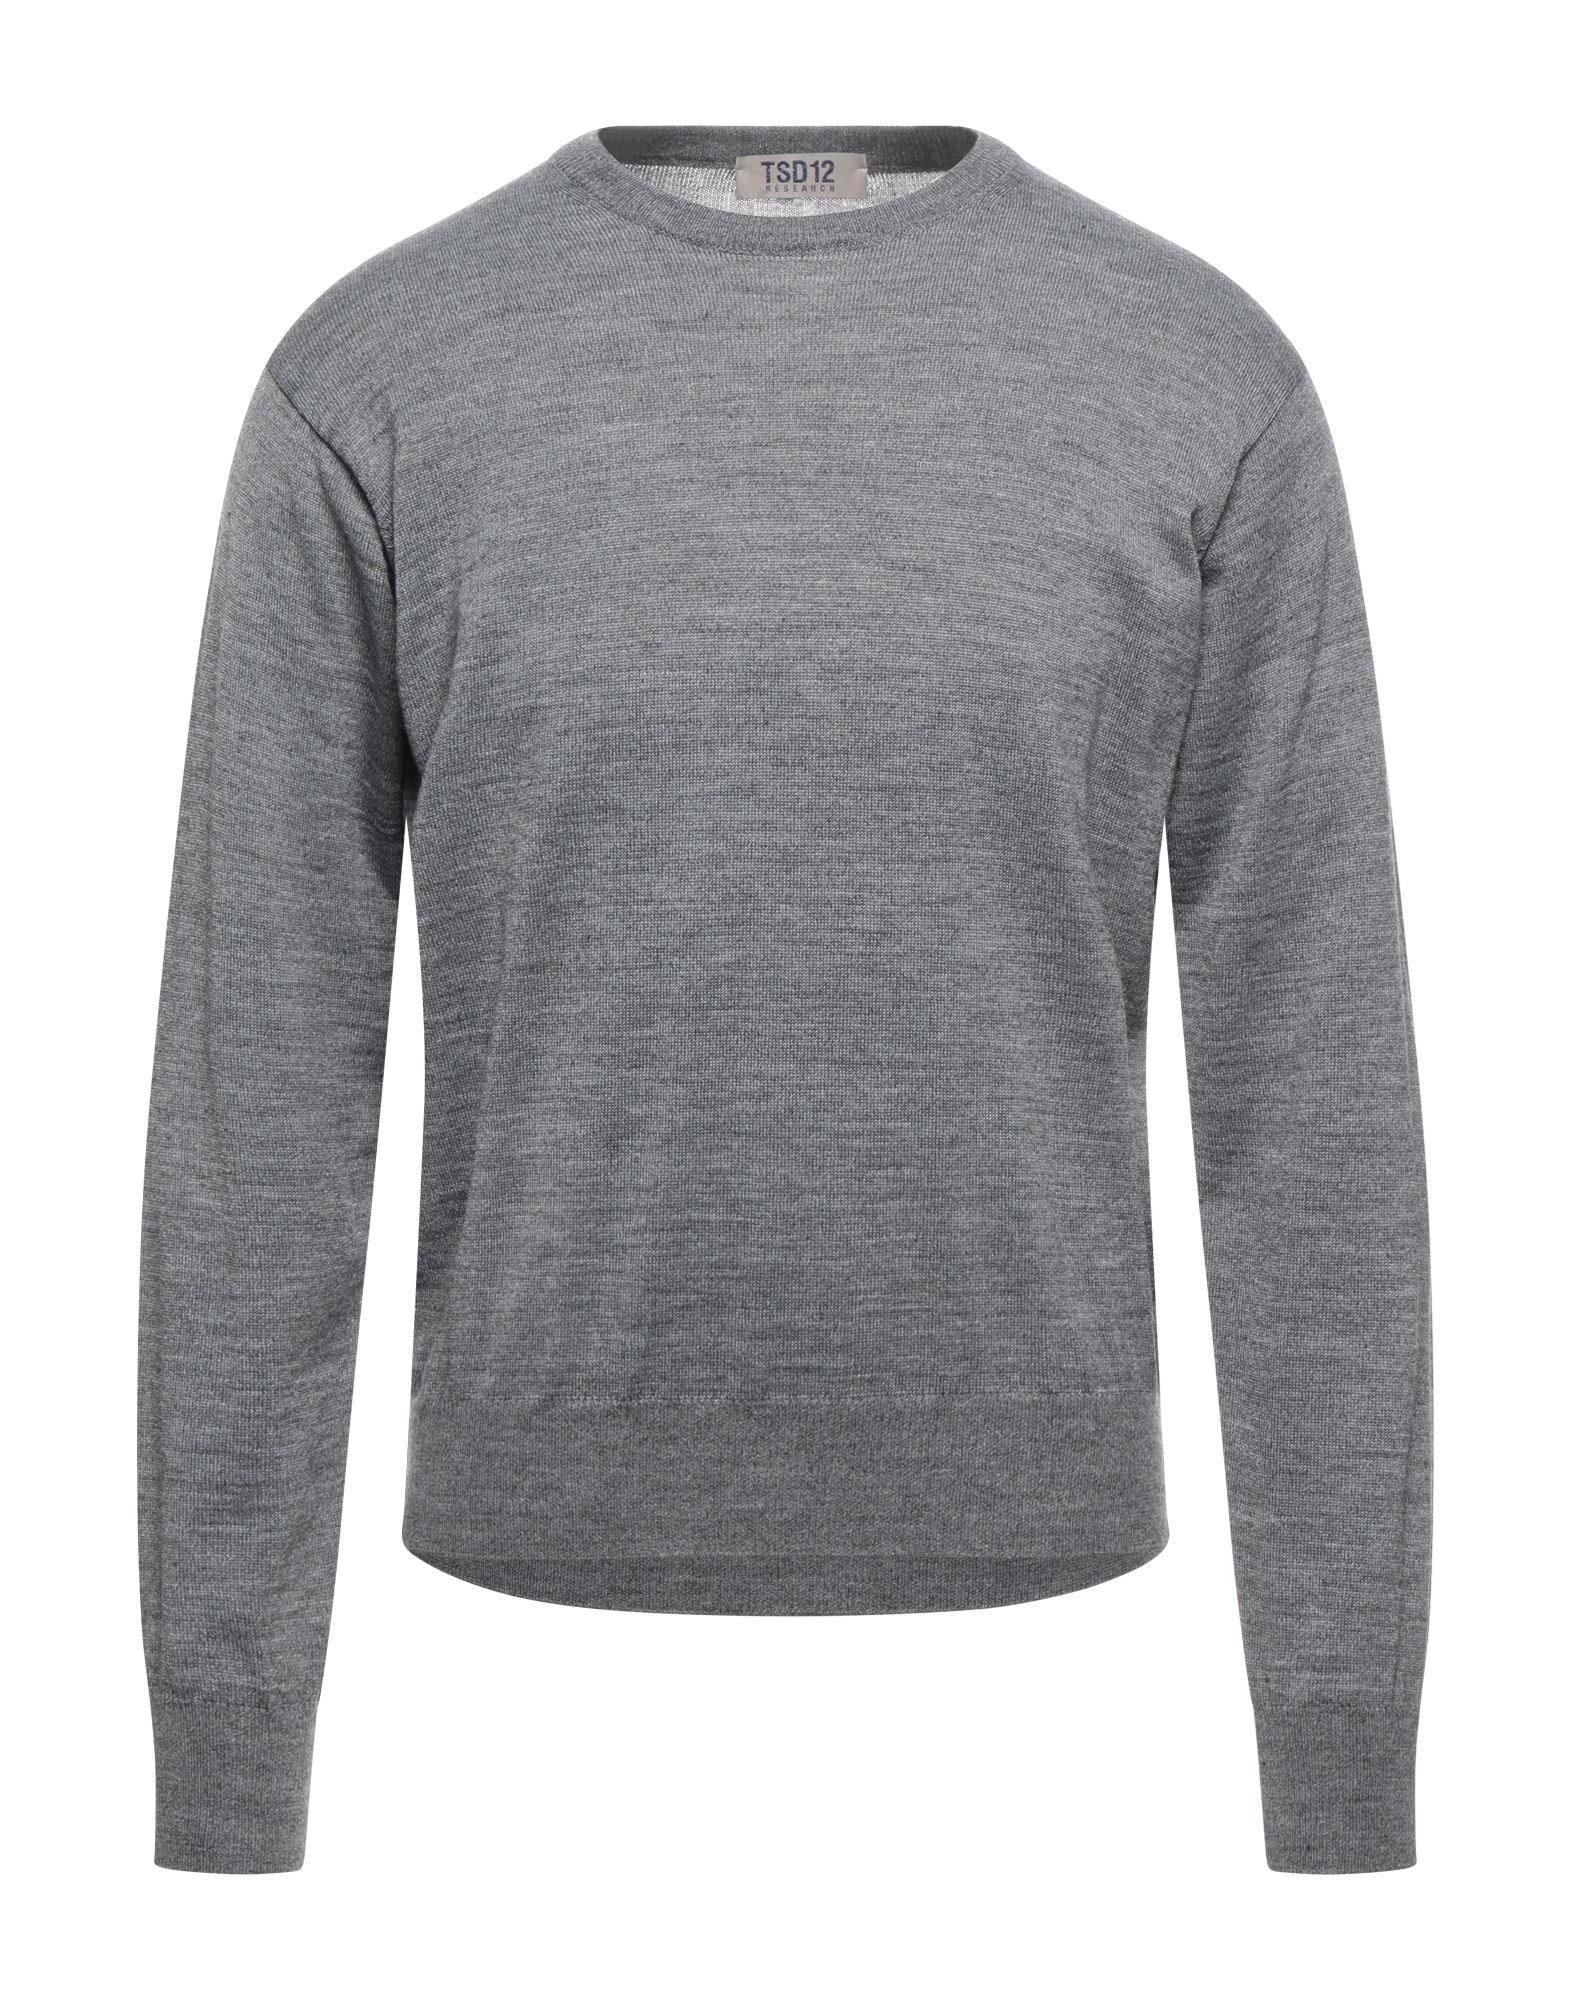 Tsd12 Man Sweater Grey Size 3xl Merino Wool, Acrylic